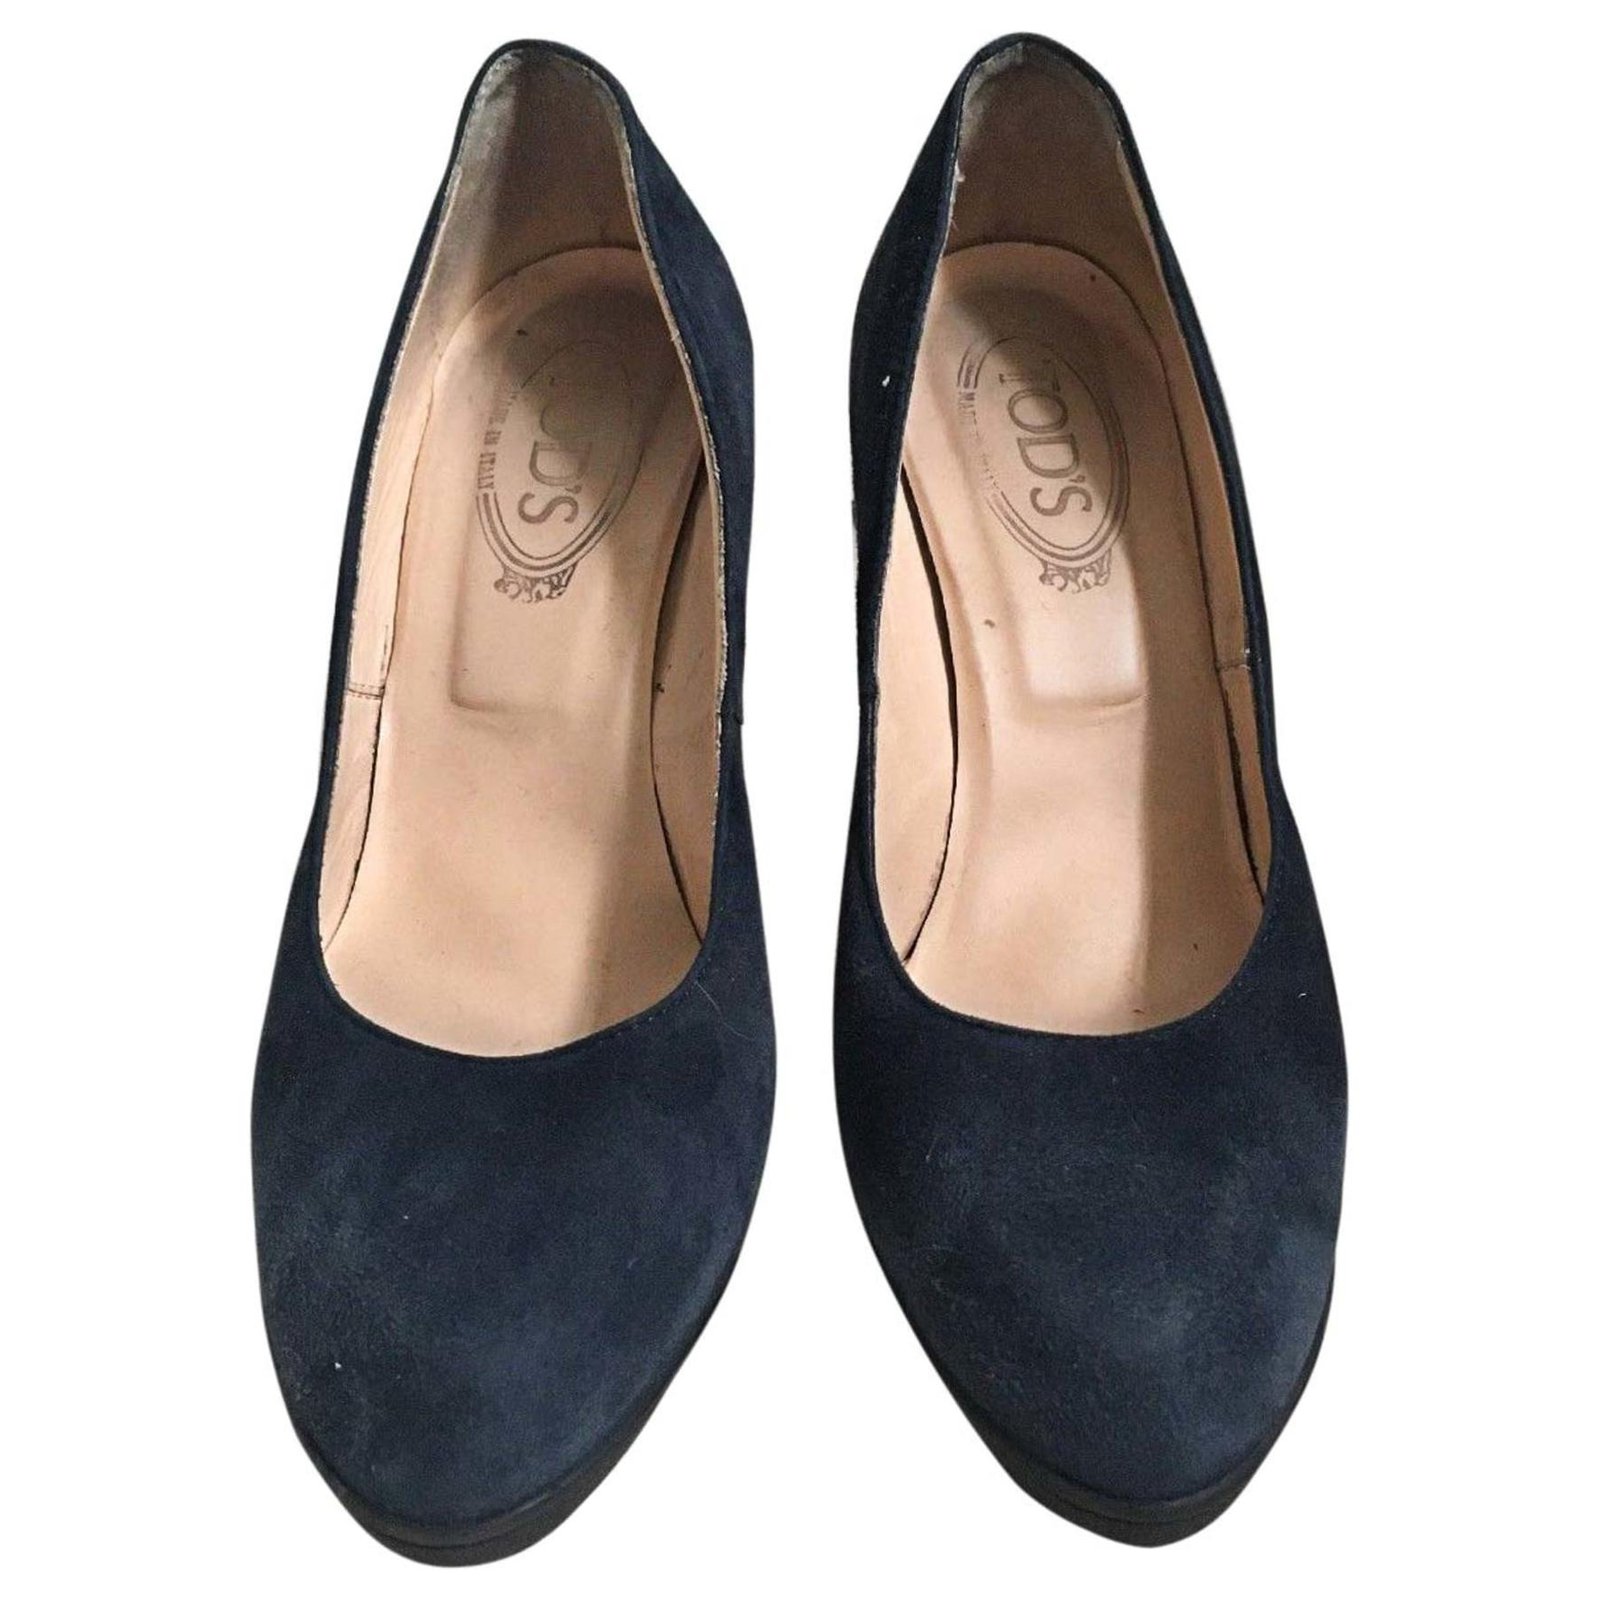 blue suede high heels